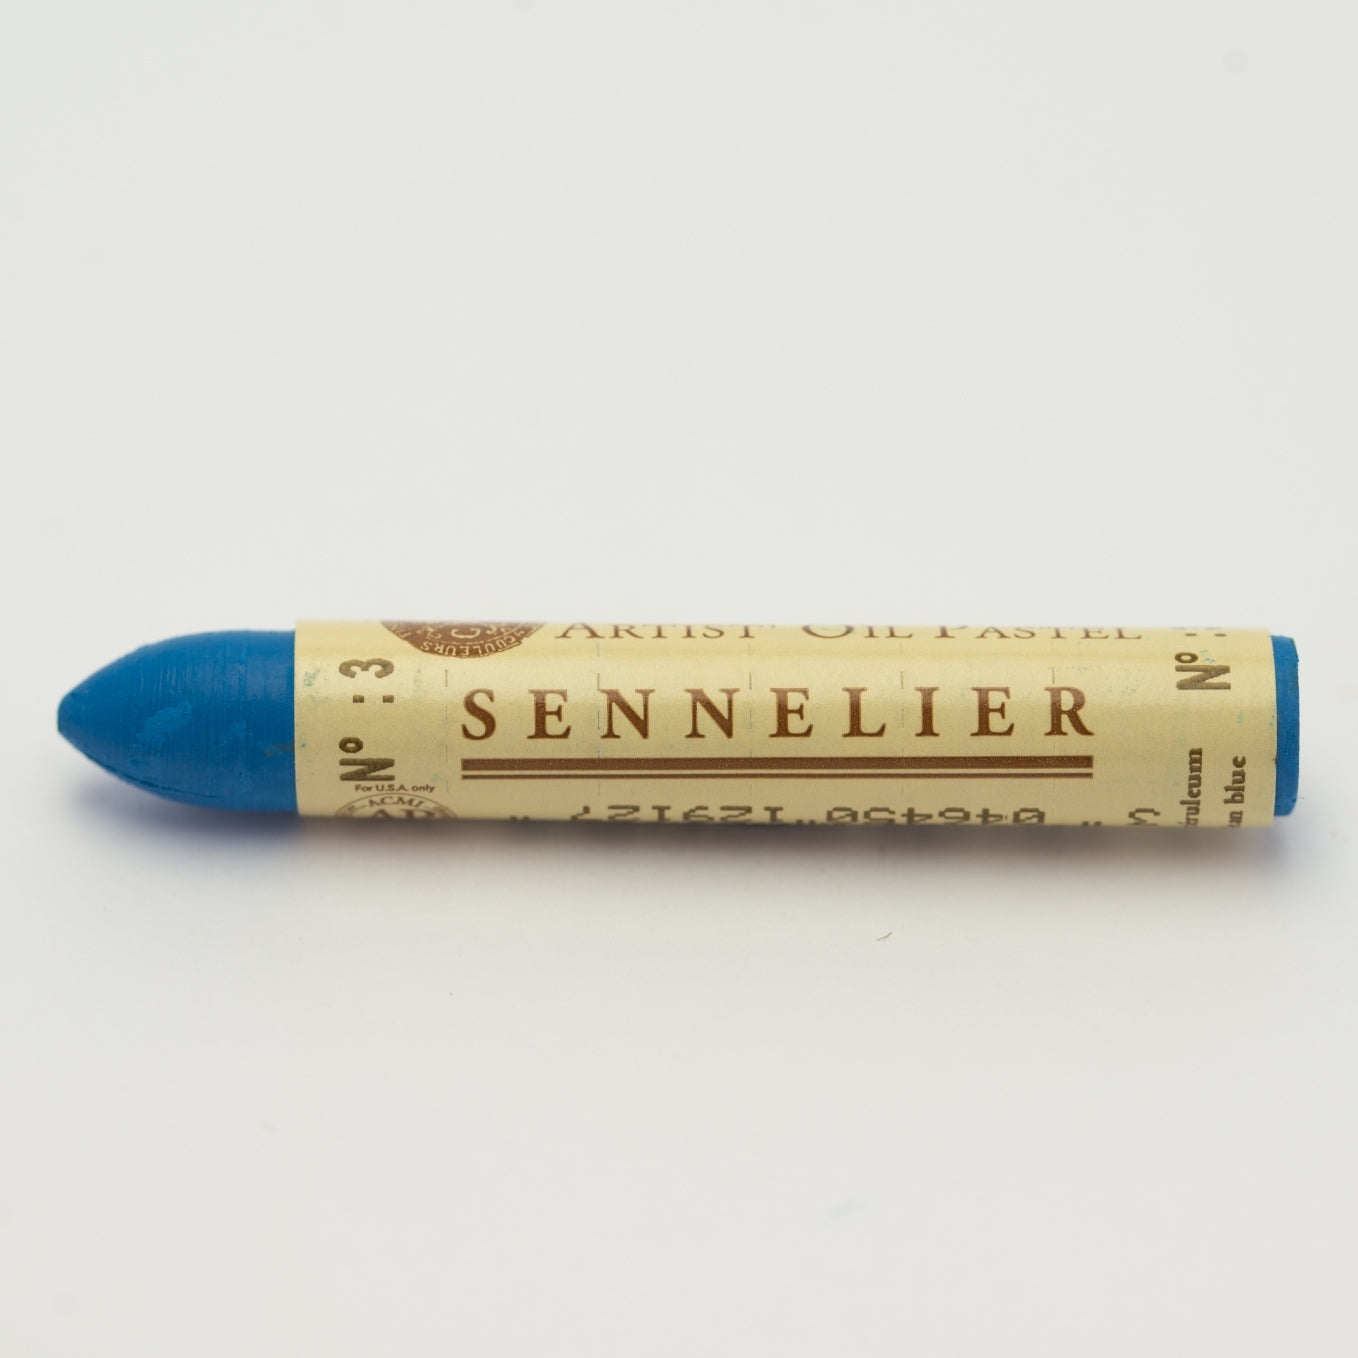 SENNELIER Artist Oil Pastel 003 Cerulean Blue